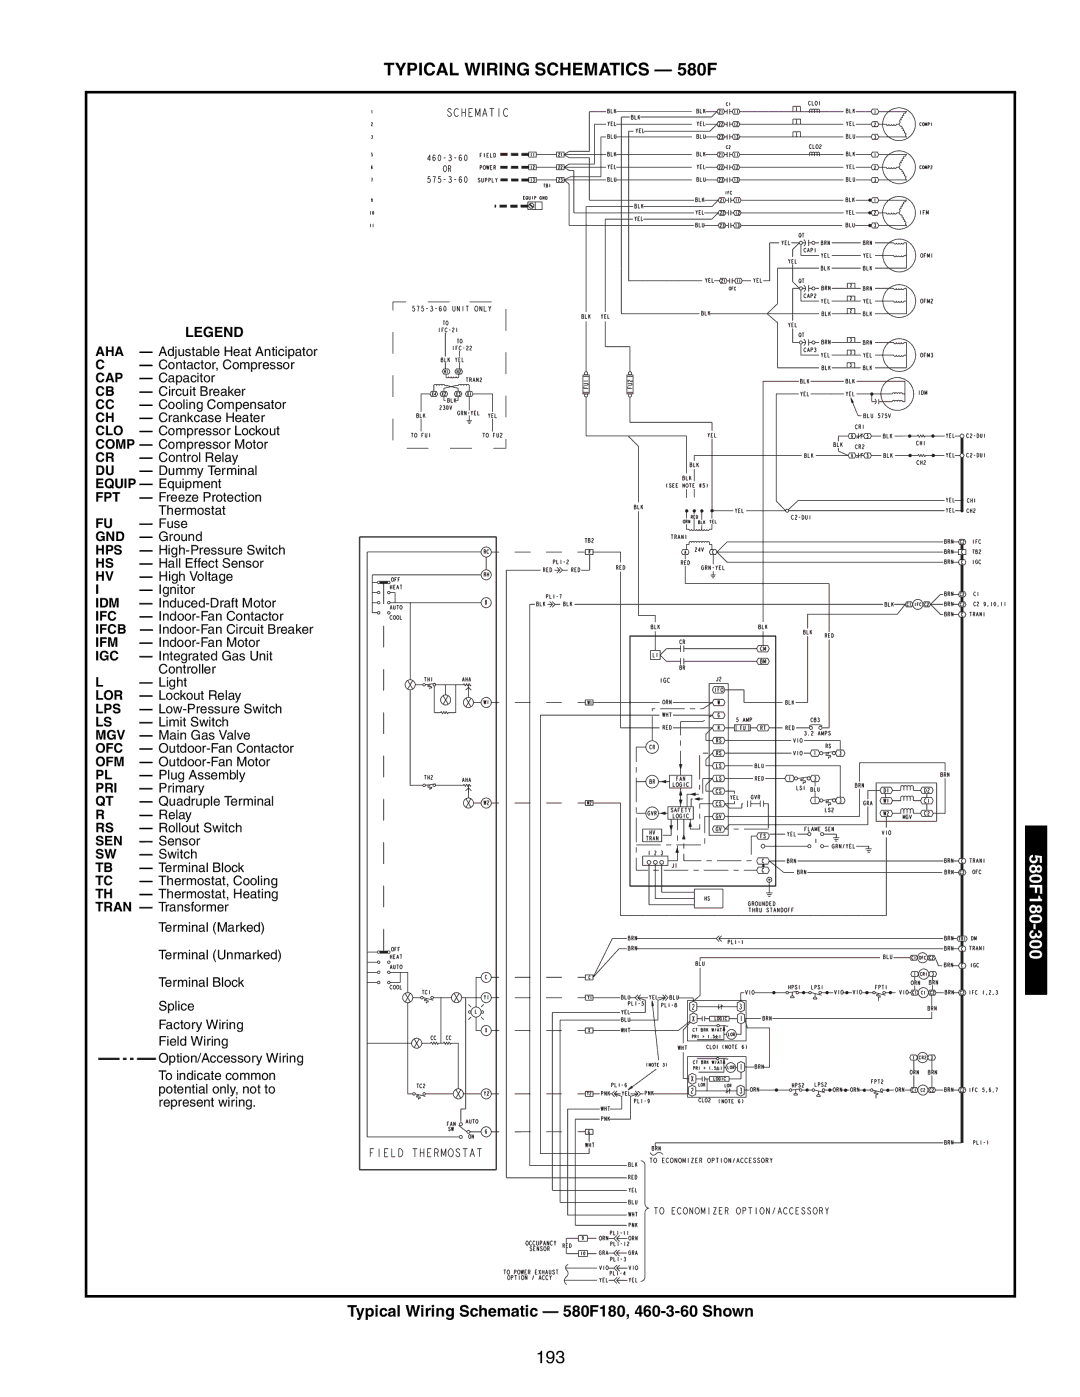 Bryant 581A/B manual Typical Wiring Schematics 580F, Typical Wiring Schematic 580F180, 460-3-60 Shown 